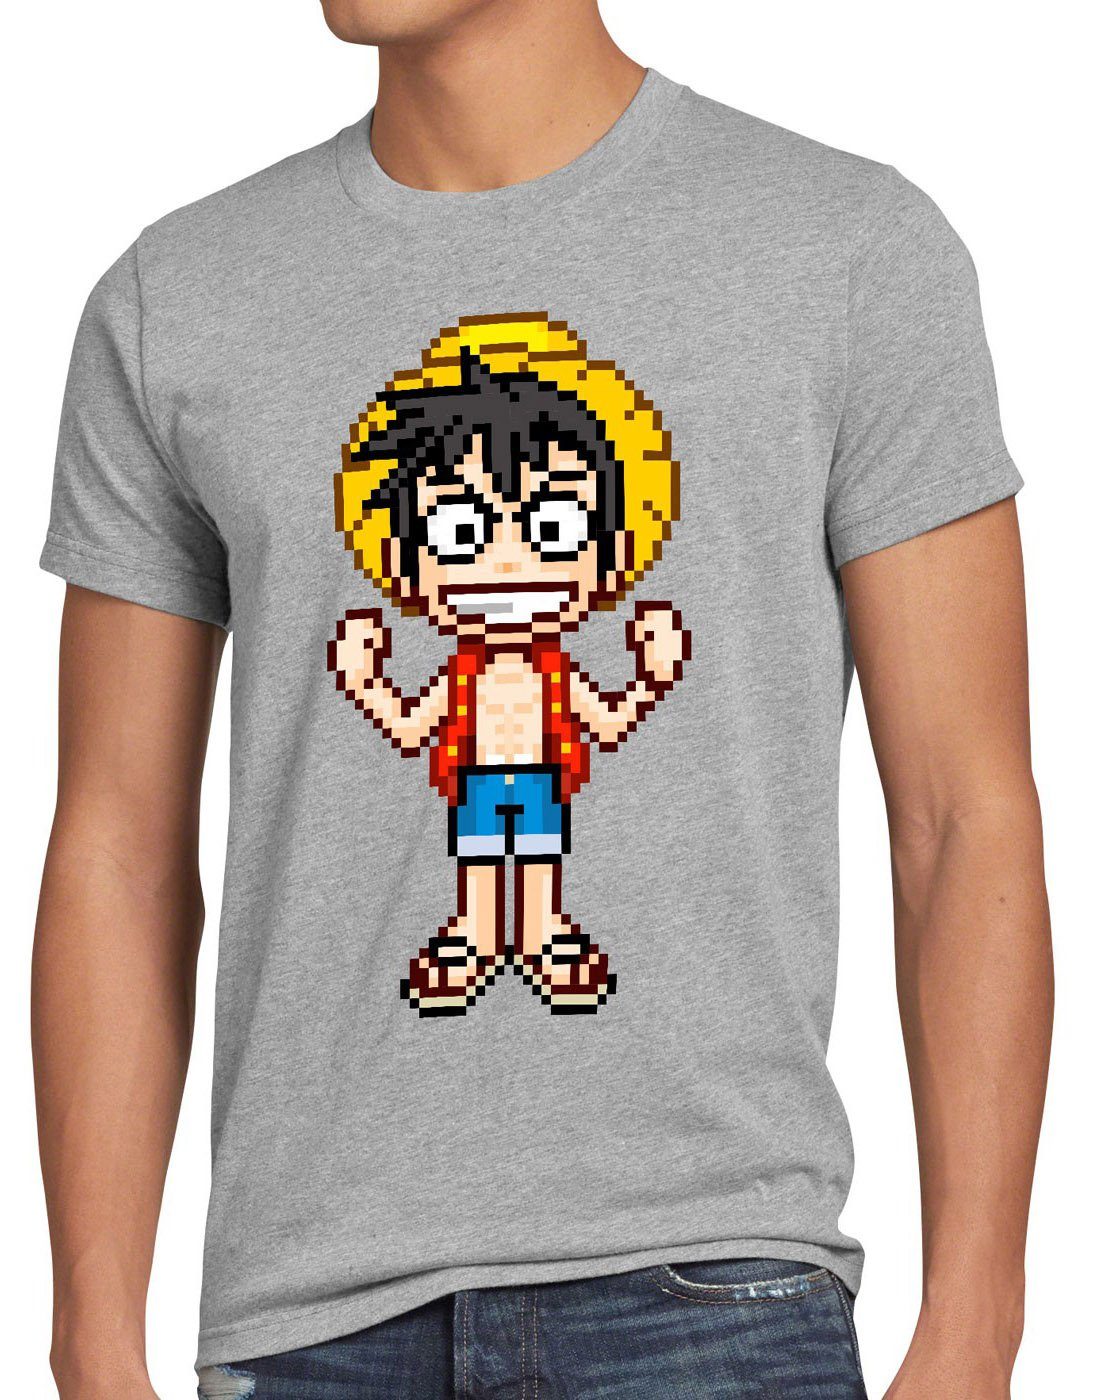 Print-Shirt grau sanji piece T-Shirt pirat neu meliert style3 anime strohhut one ruffy Luffy manga Herren Pixel